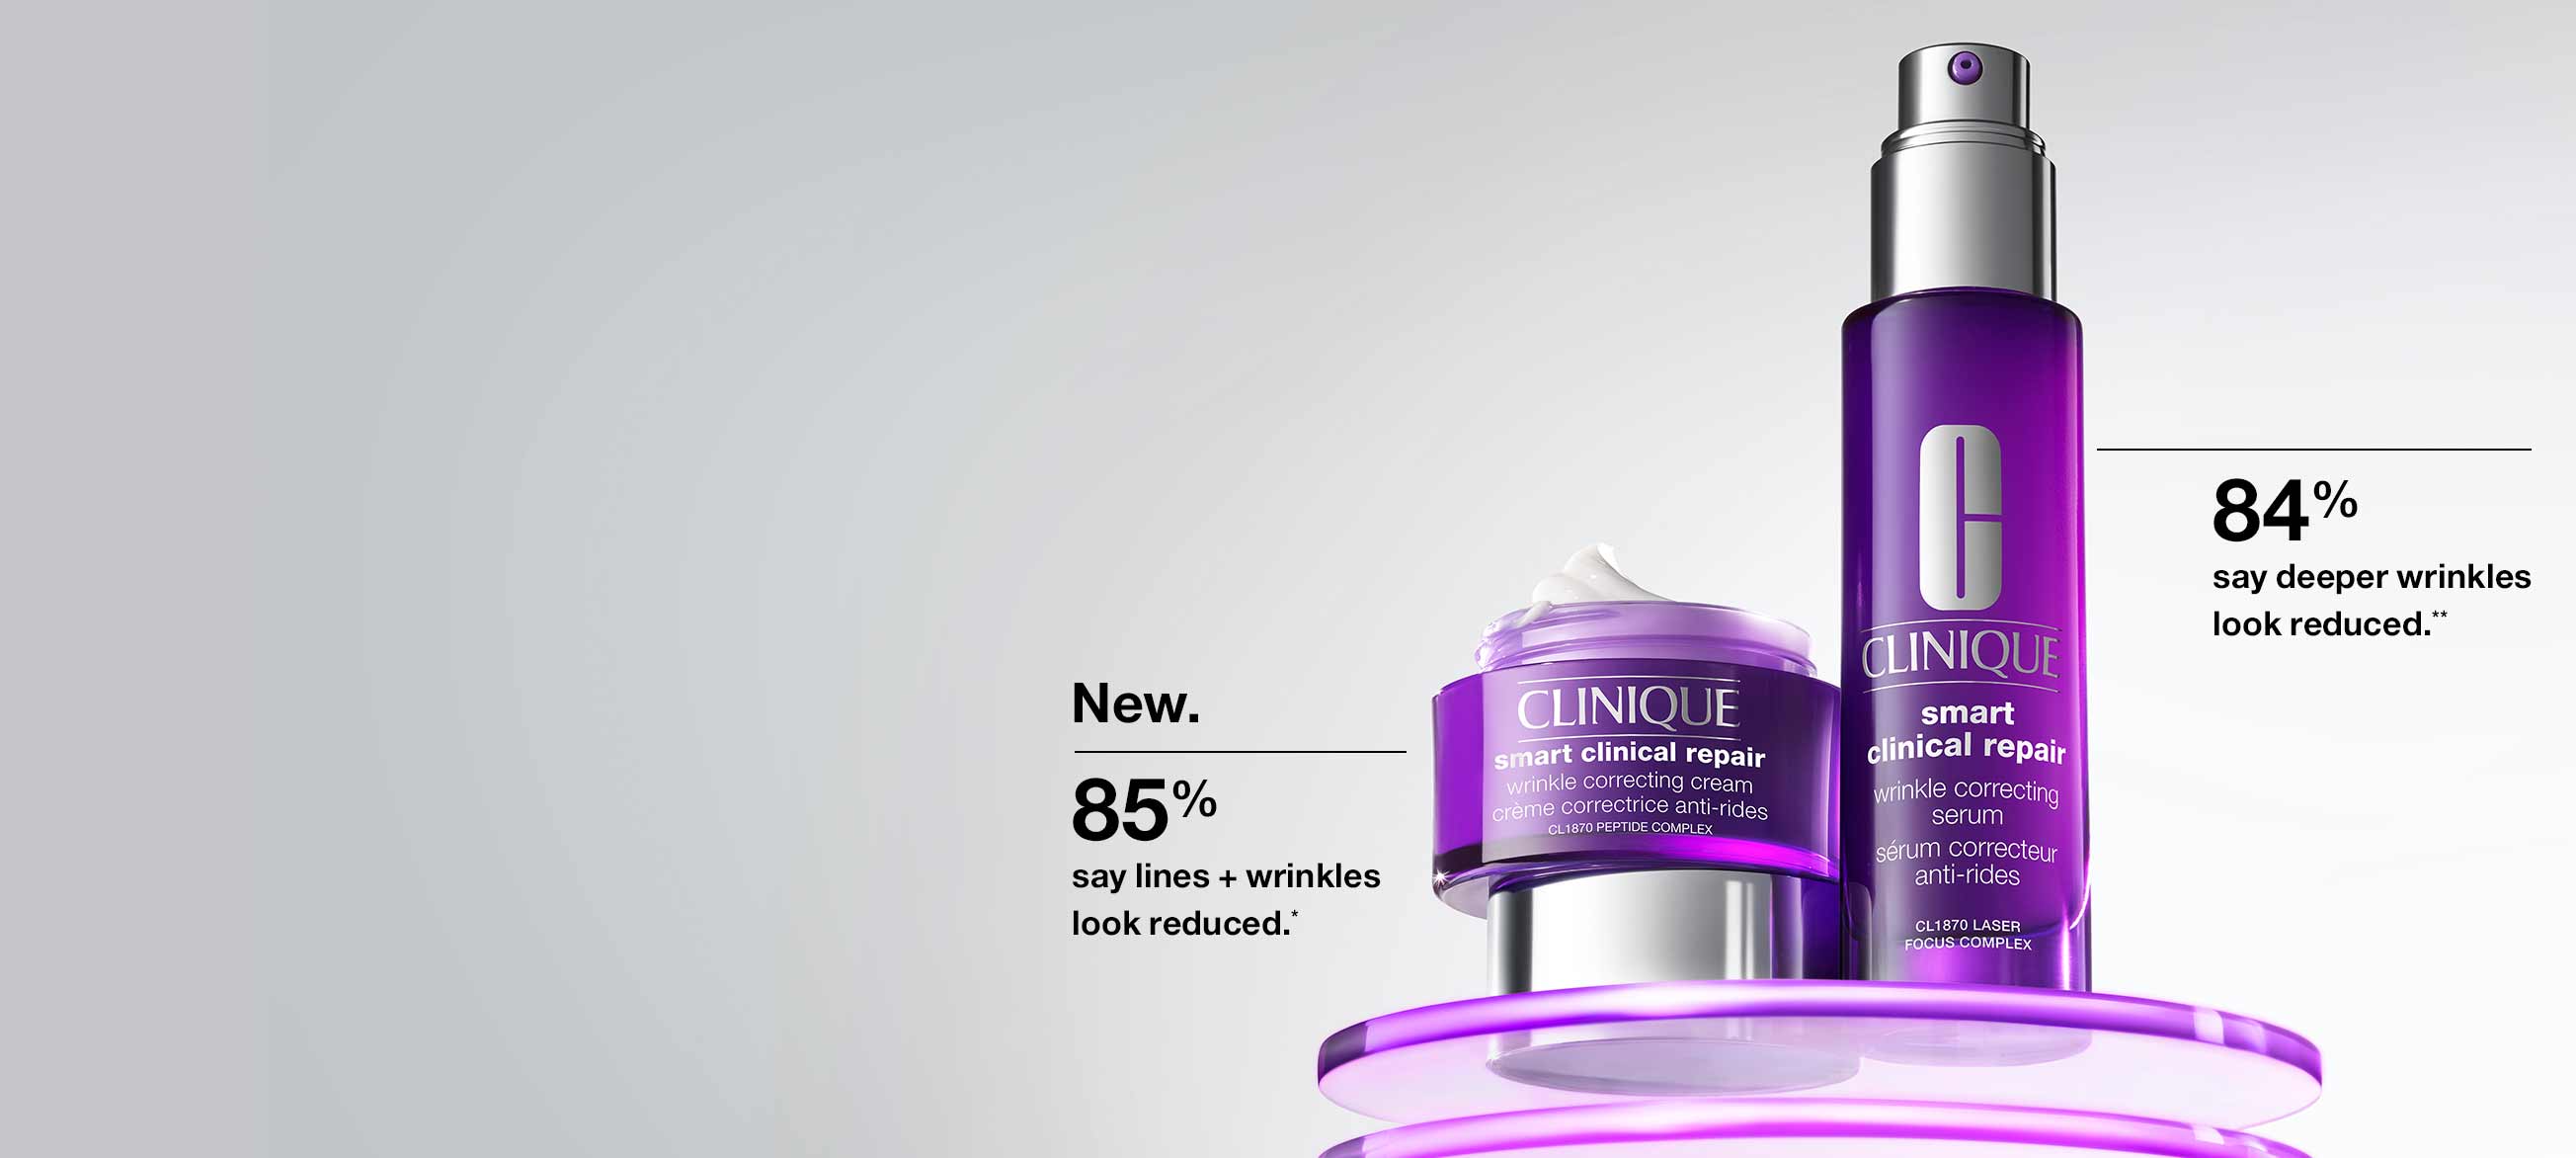 New. 85% say lines + wrinkles look reduced.* 84% say deeper wrinkles look reduced.**